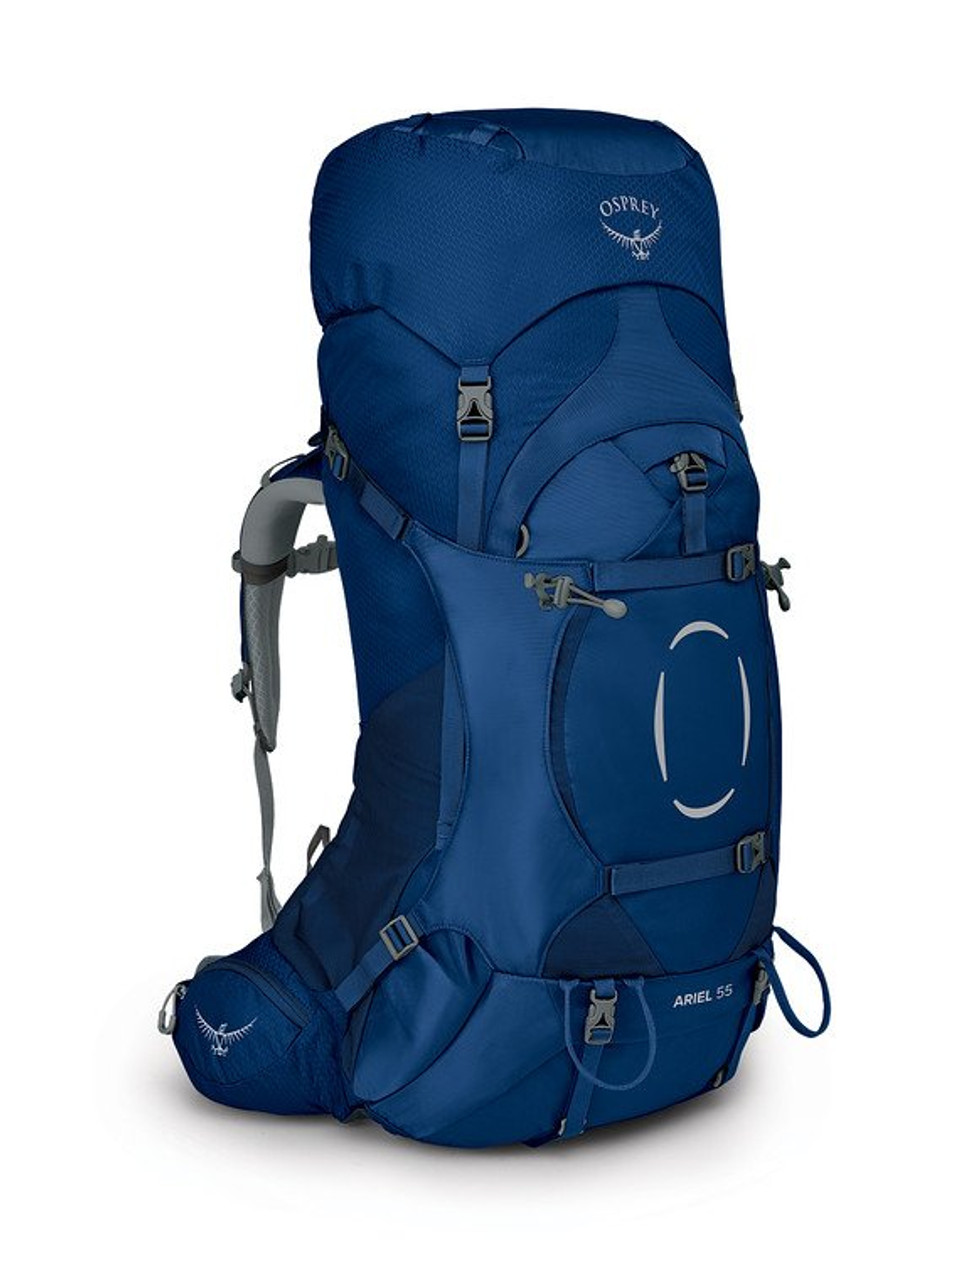 Ariel 55 Backpack